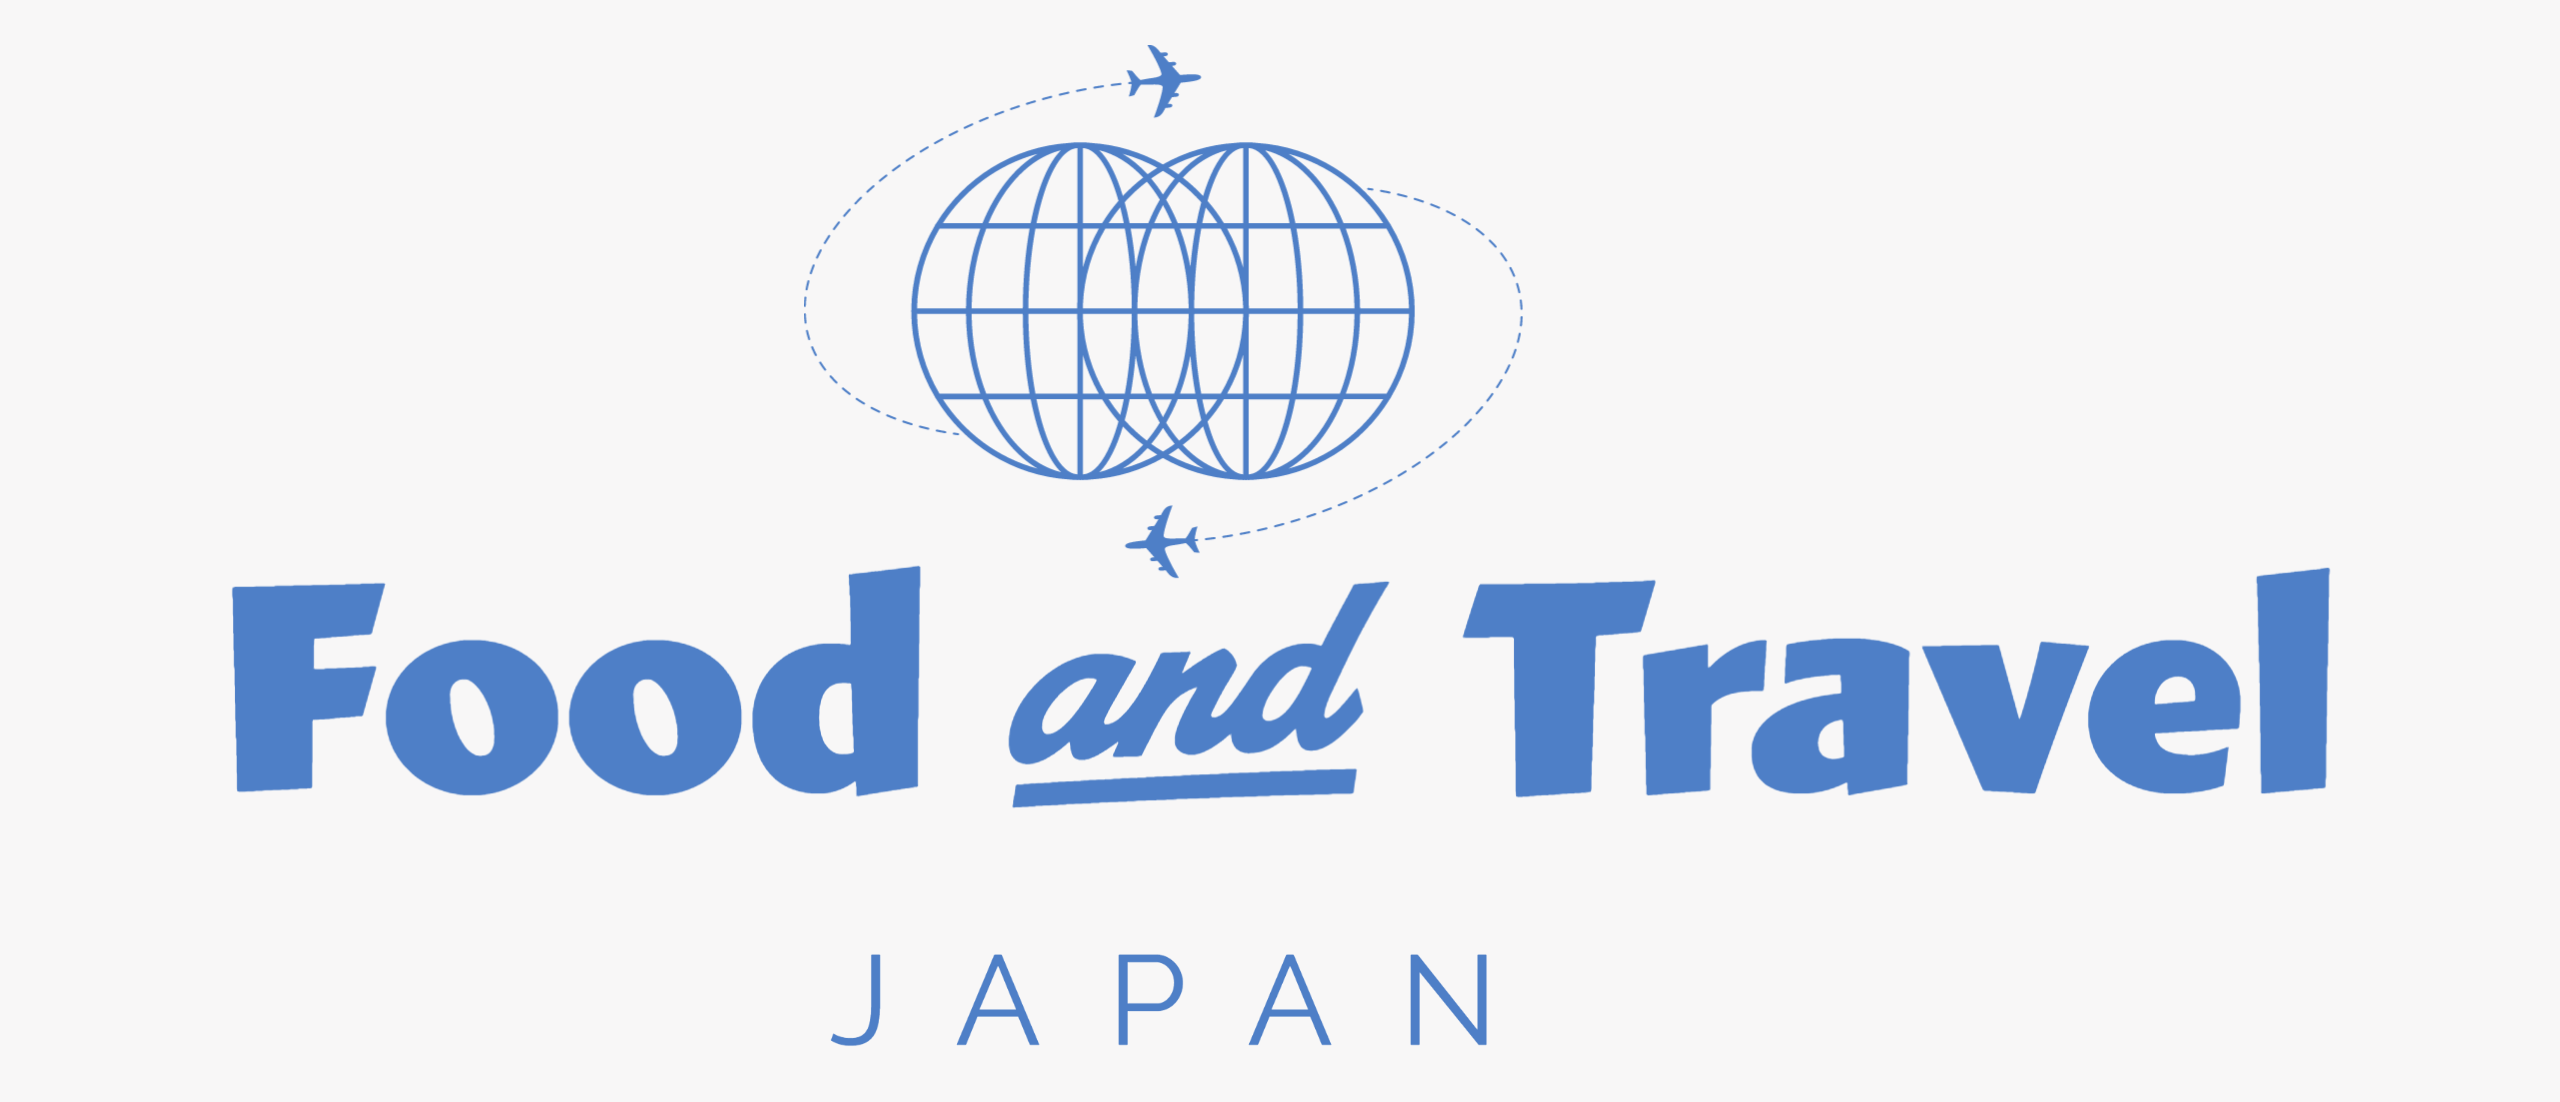 Japanese food & travel